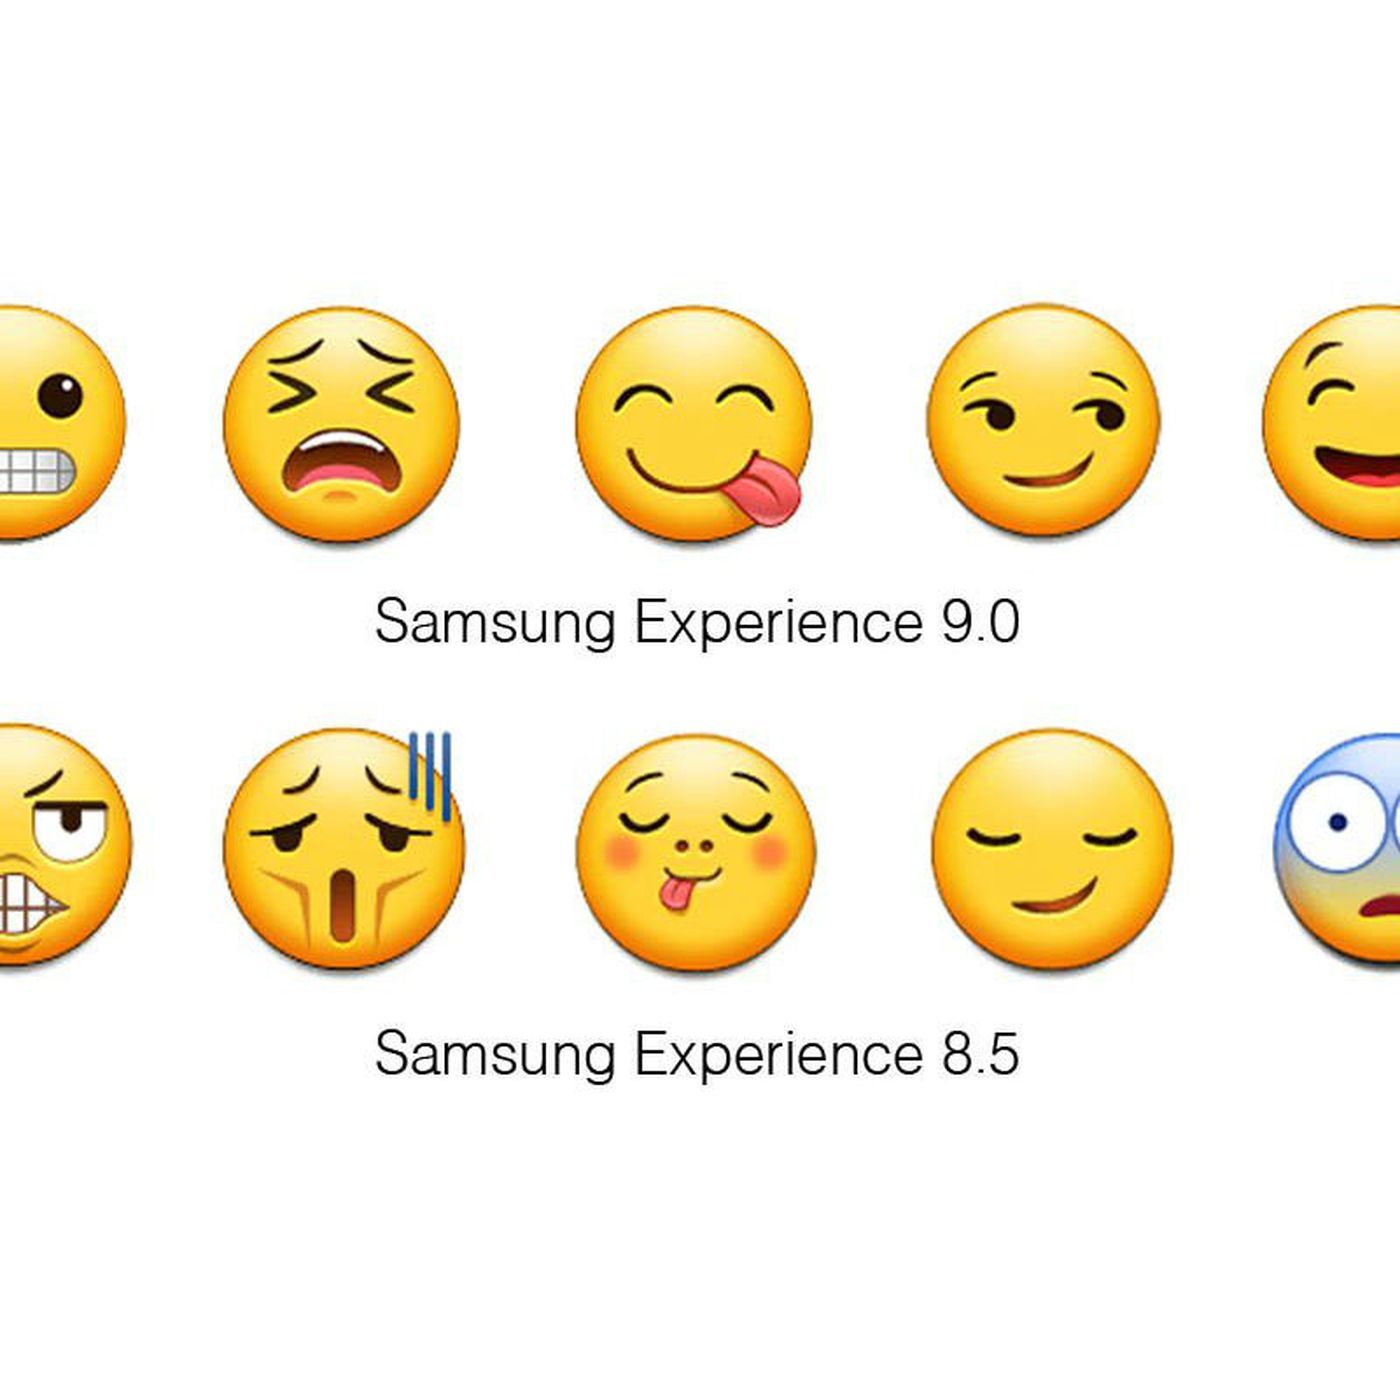 Samsung is finally updating its terrible emoji